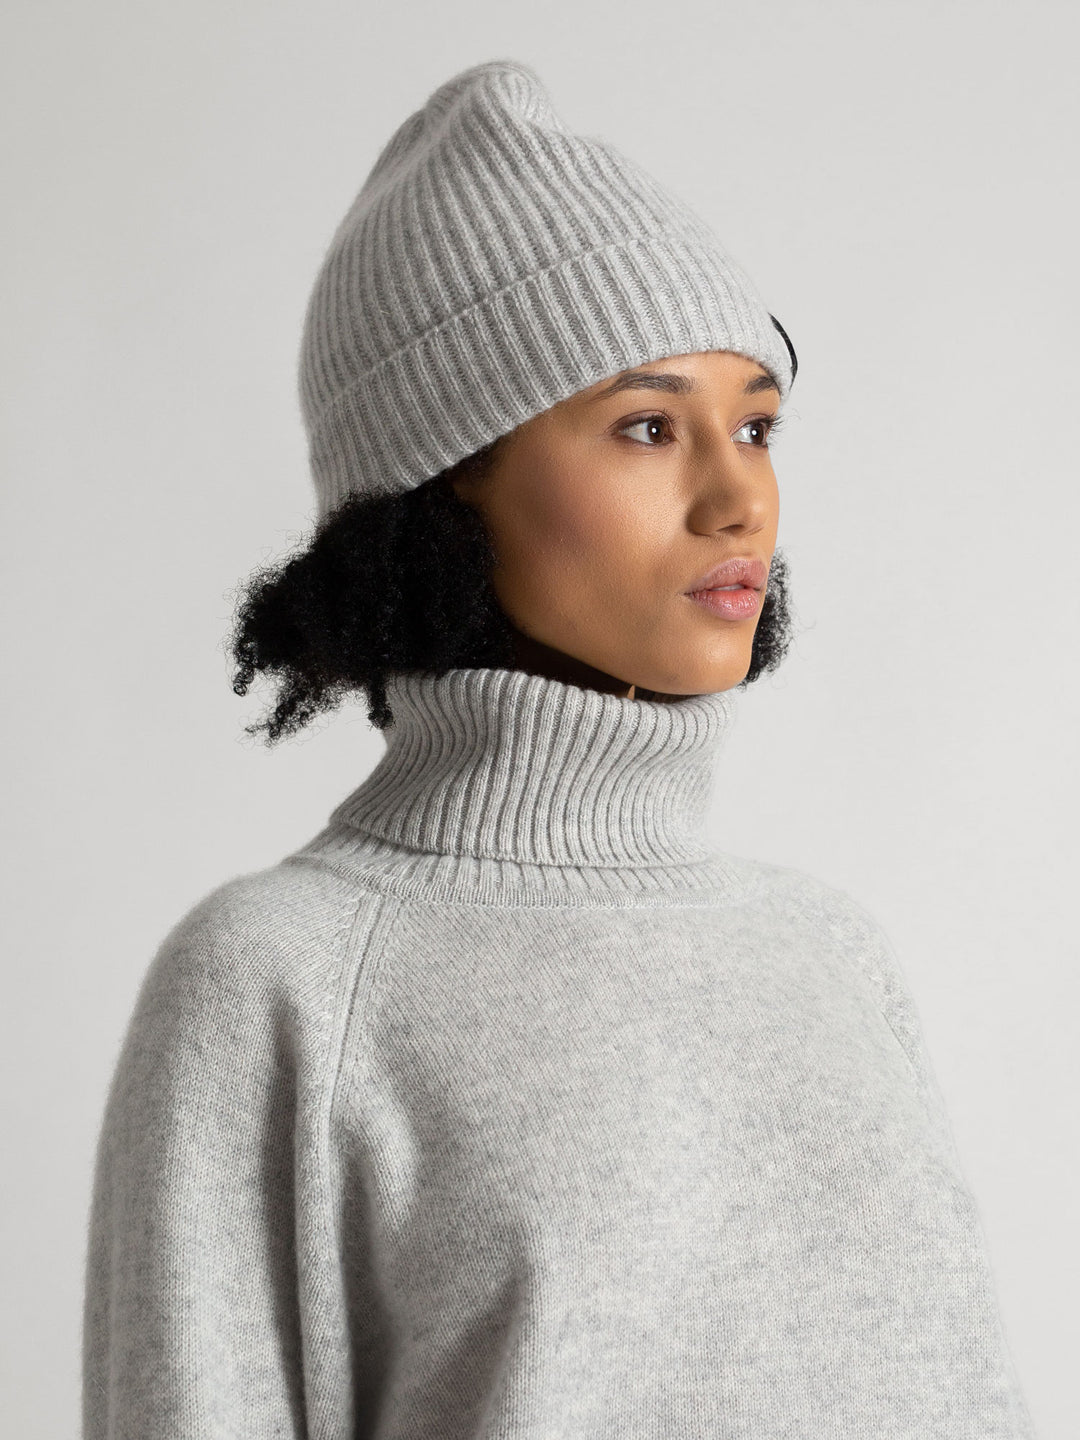 Cashmere cap "Elli", 100% pure cashmere, light grey, knitted, non itching, soft, beanie, cap, Scandinavian design by Kashmina